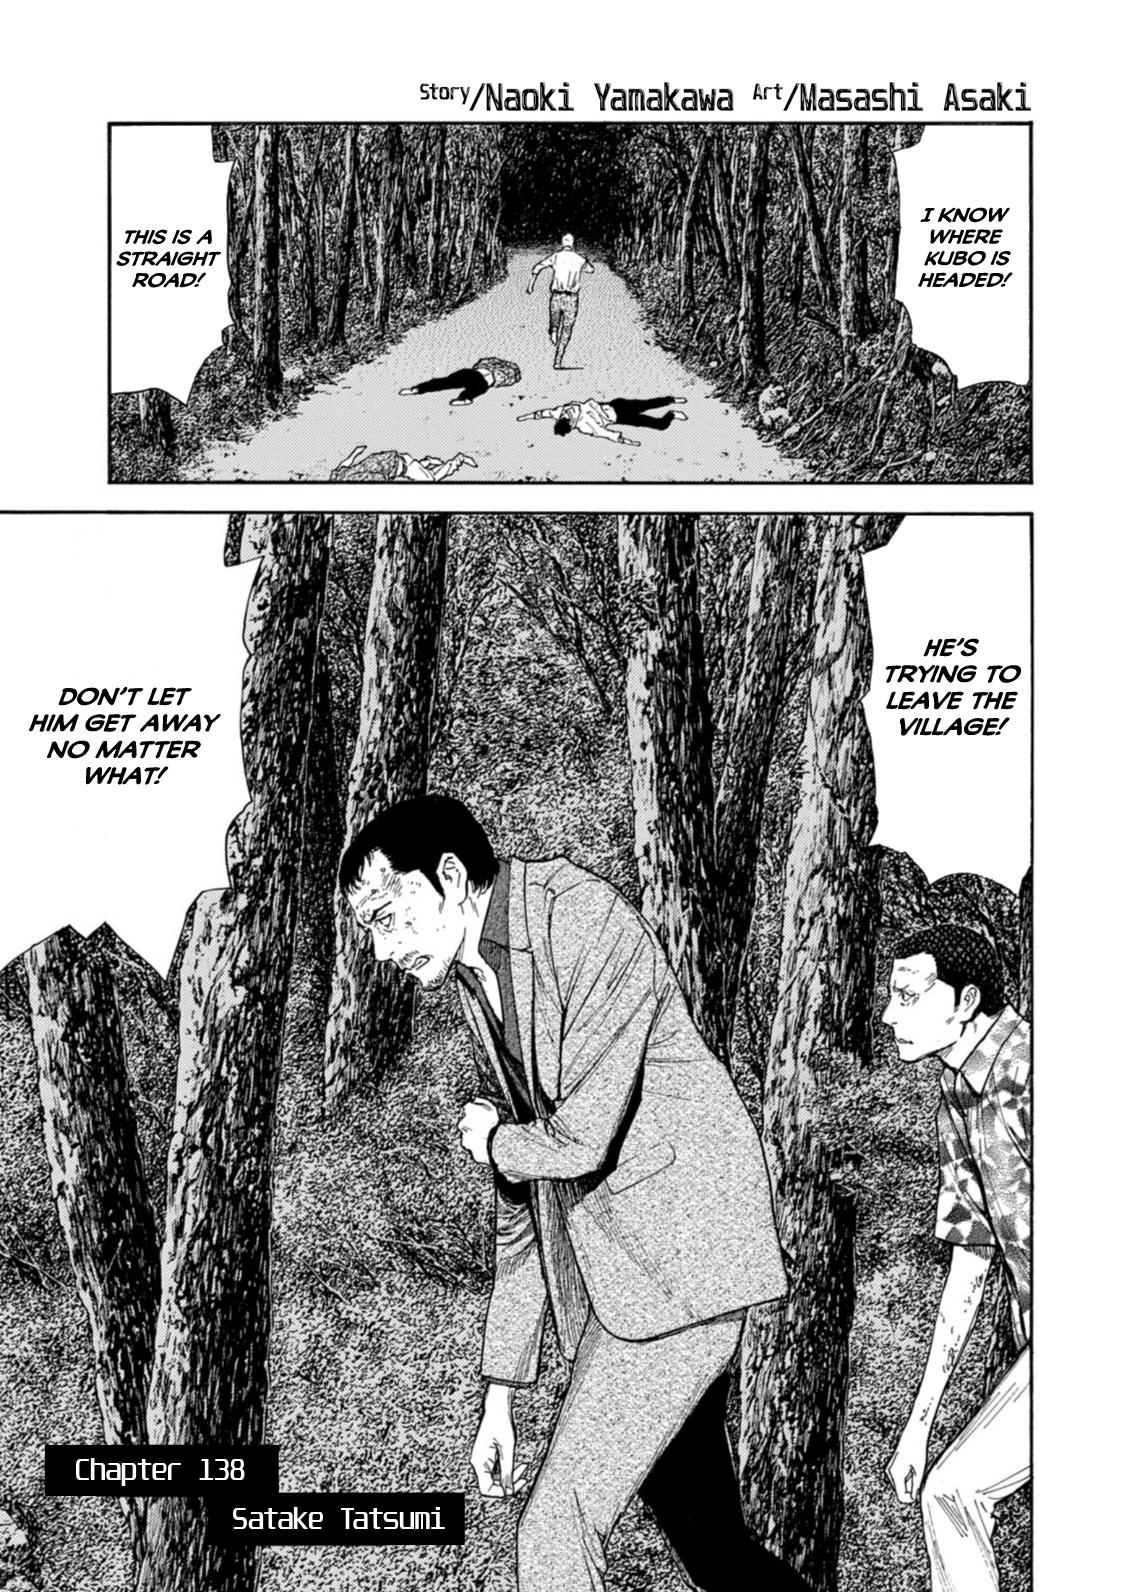 Read My Home Hero Vol.1 Chapter 4: Sushizanmai! on Mangakakalot